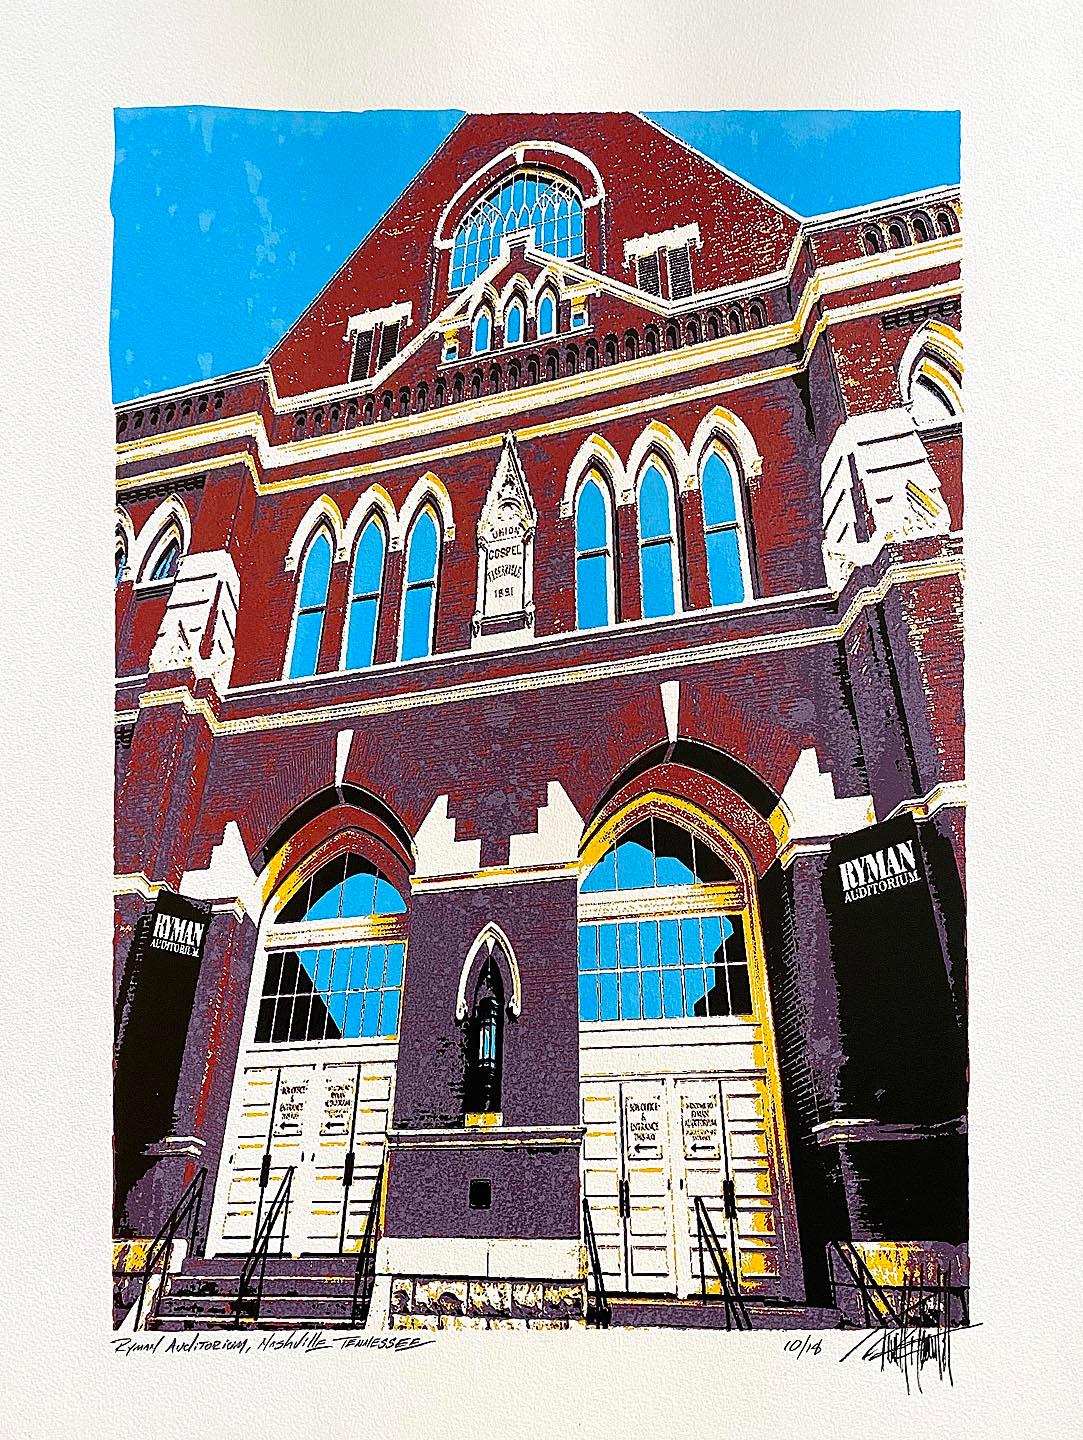 The Ryman Auditorium (8/18) - Print by Terrell Thornhill 